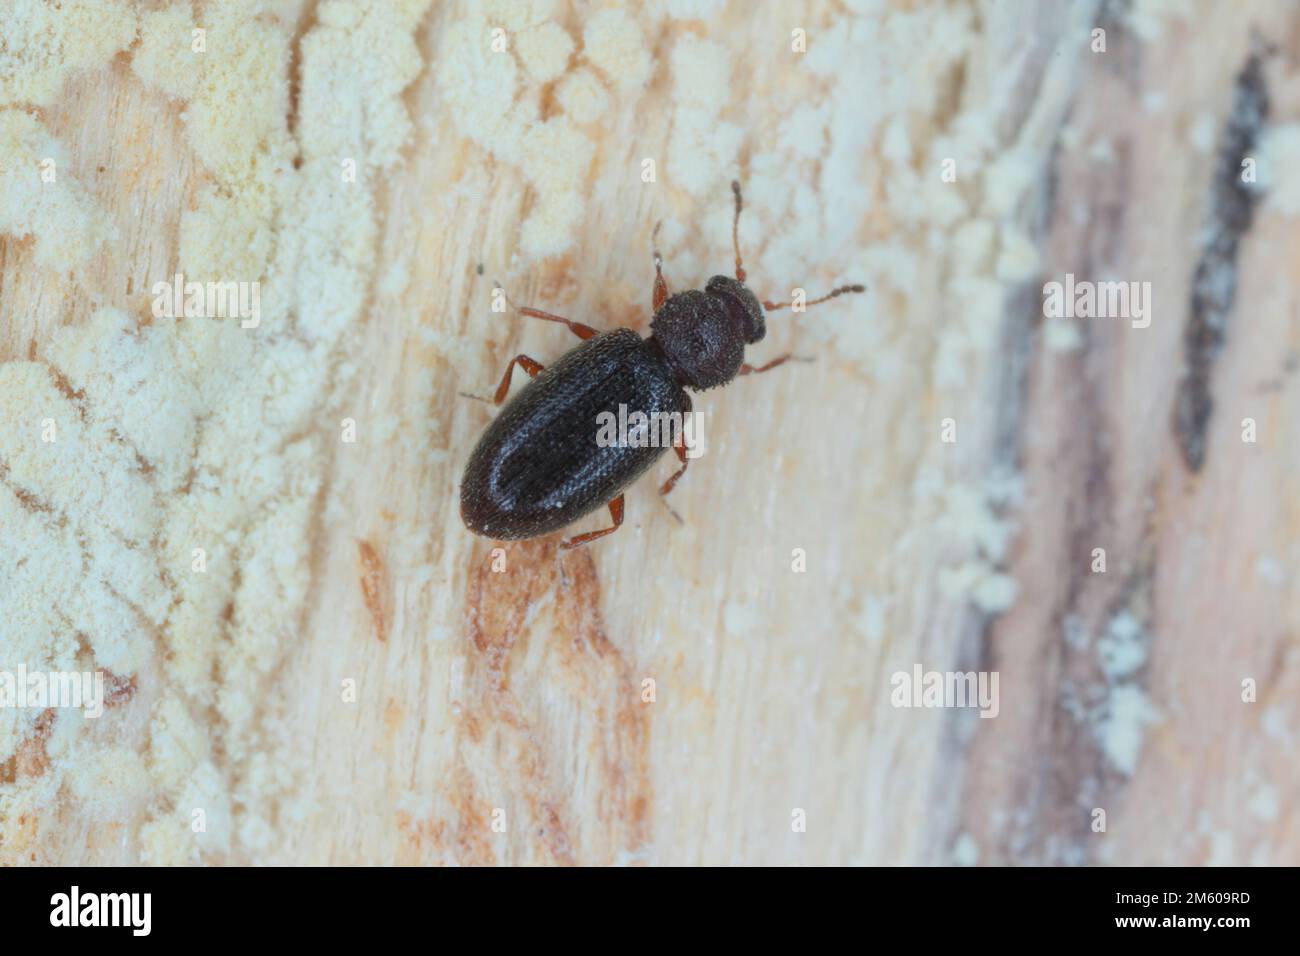 Tiny minute brown scavenger beetle Latridiidae, lathridiidae on wood. High magnification. Stock Photo